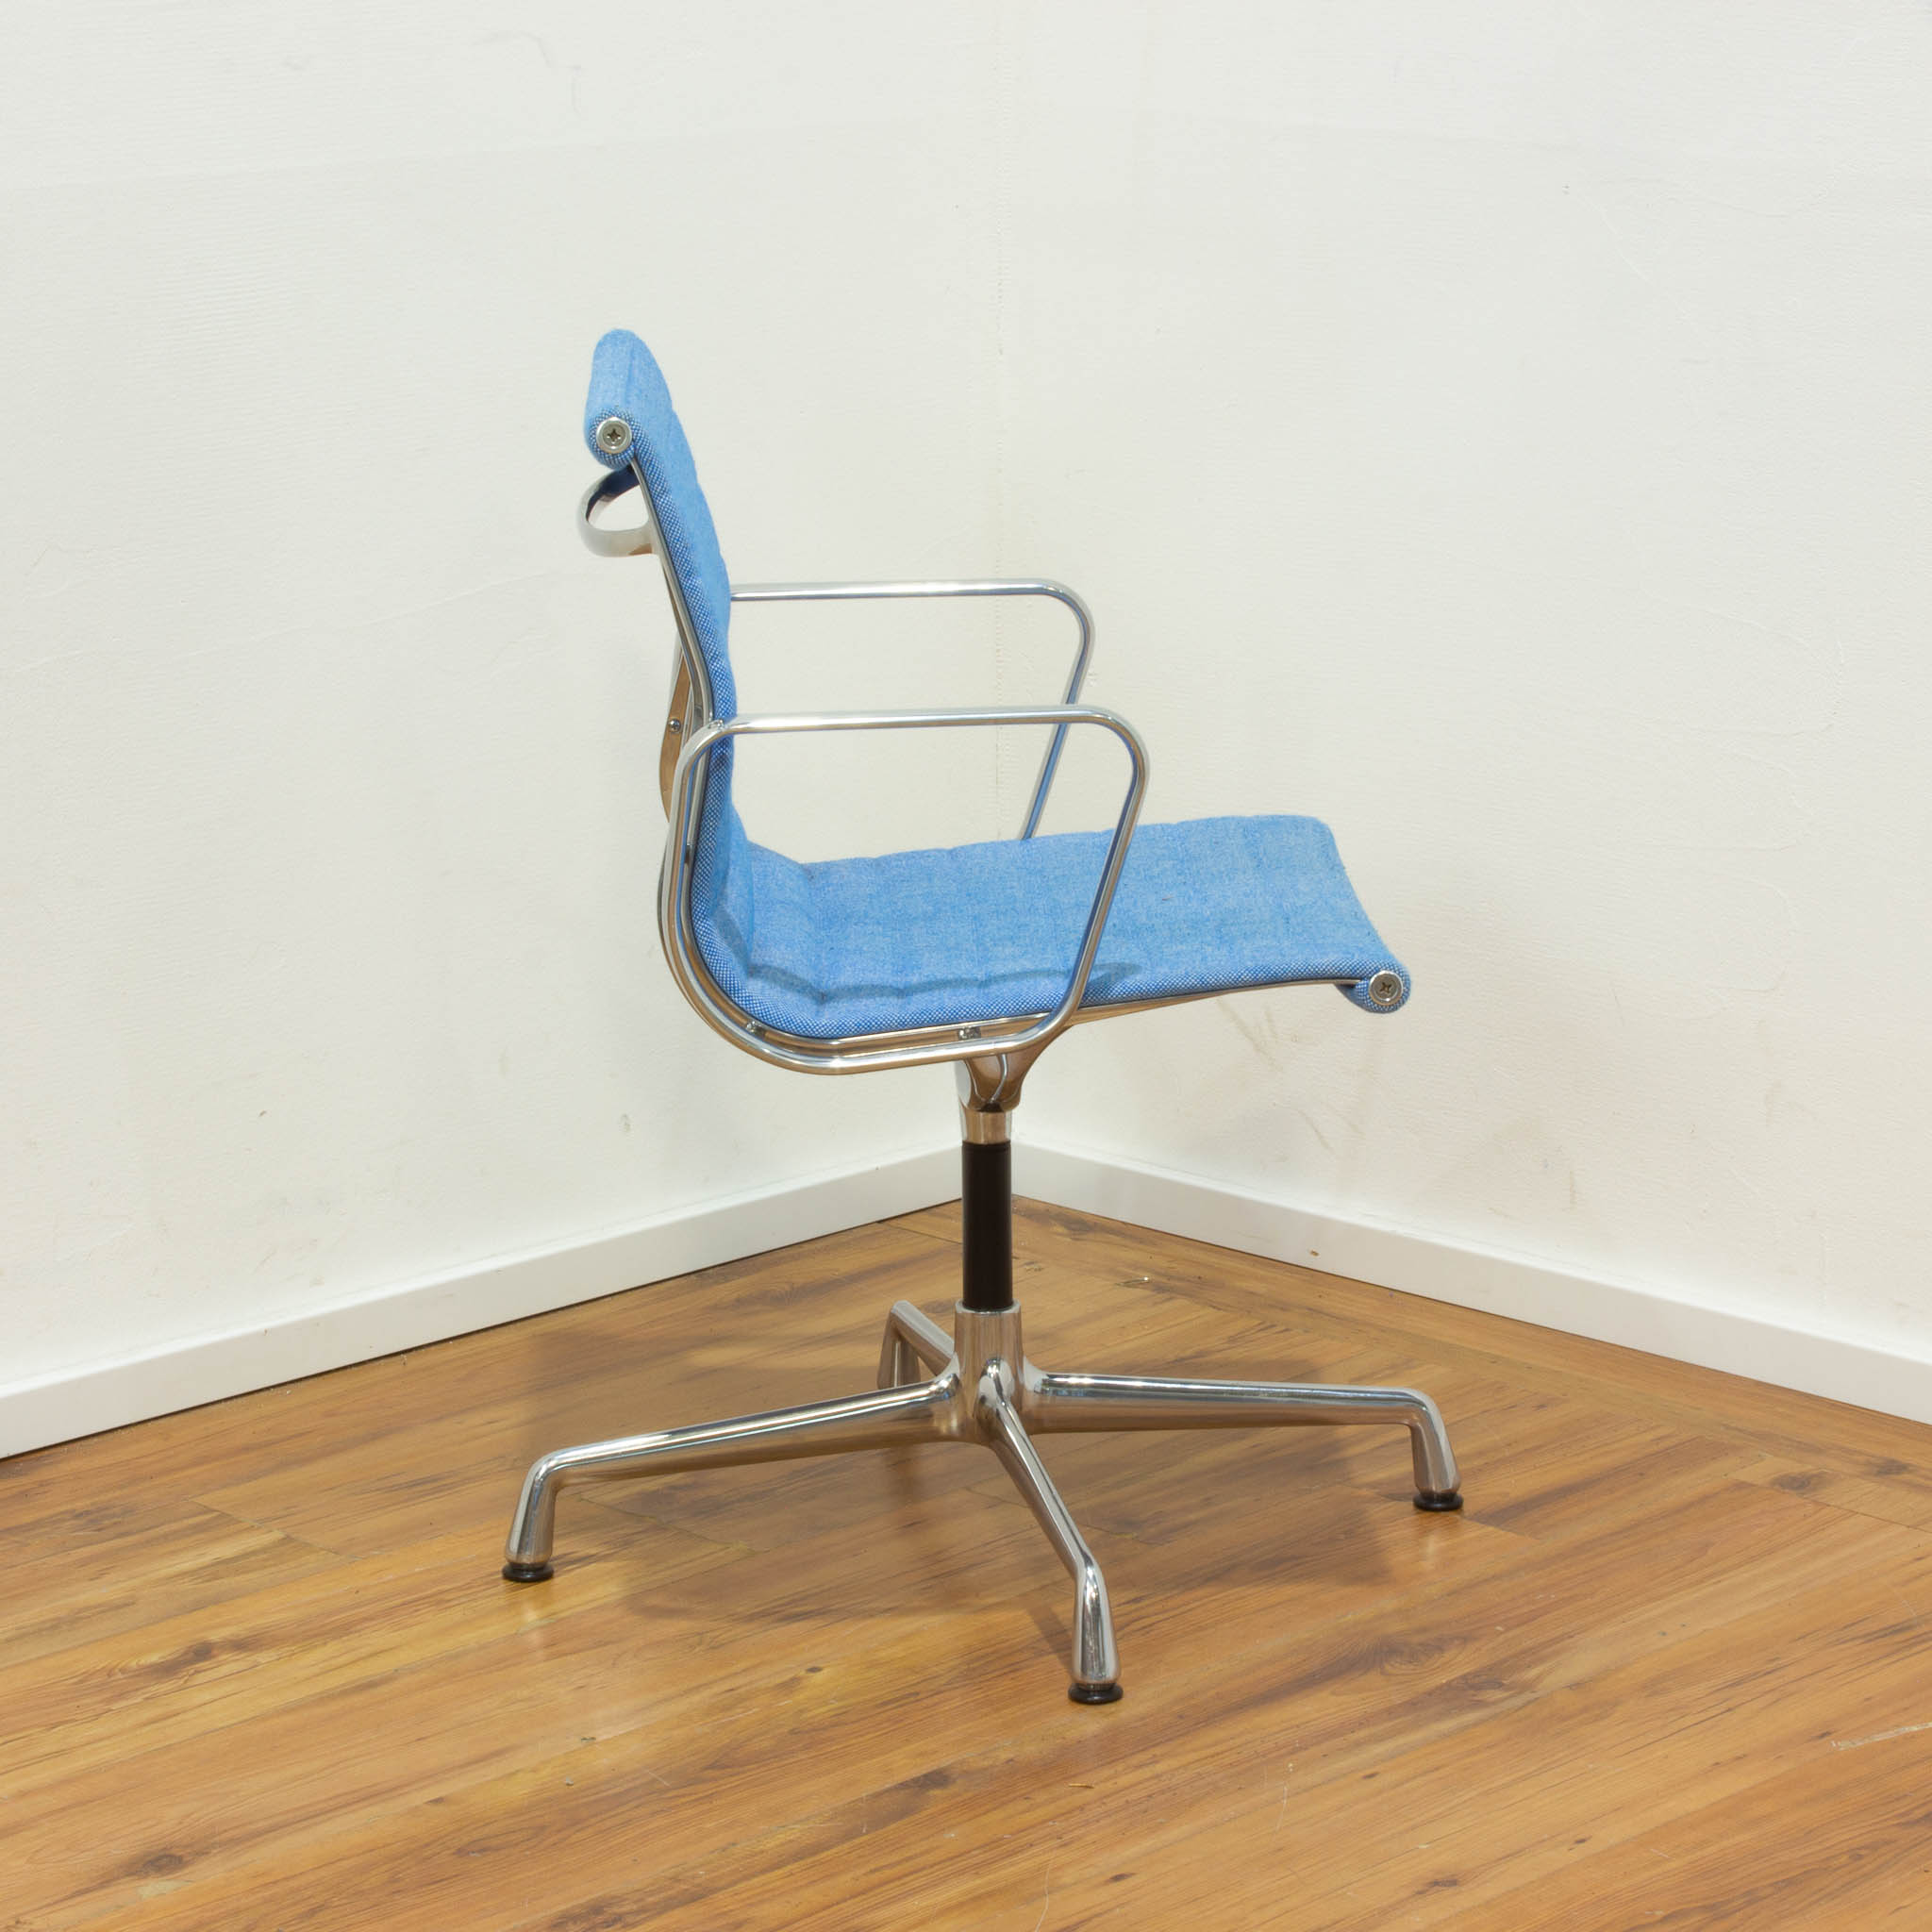 Vitra Eames Alu Chair EA 108 Konferenzstuhl - Hopsak hellblau - mit Armlehnen